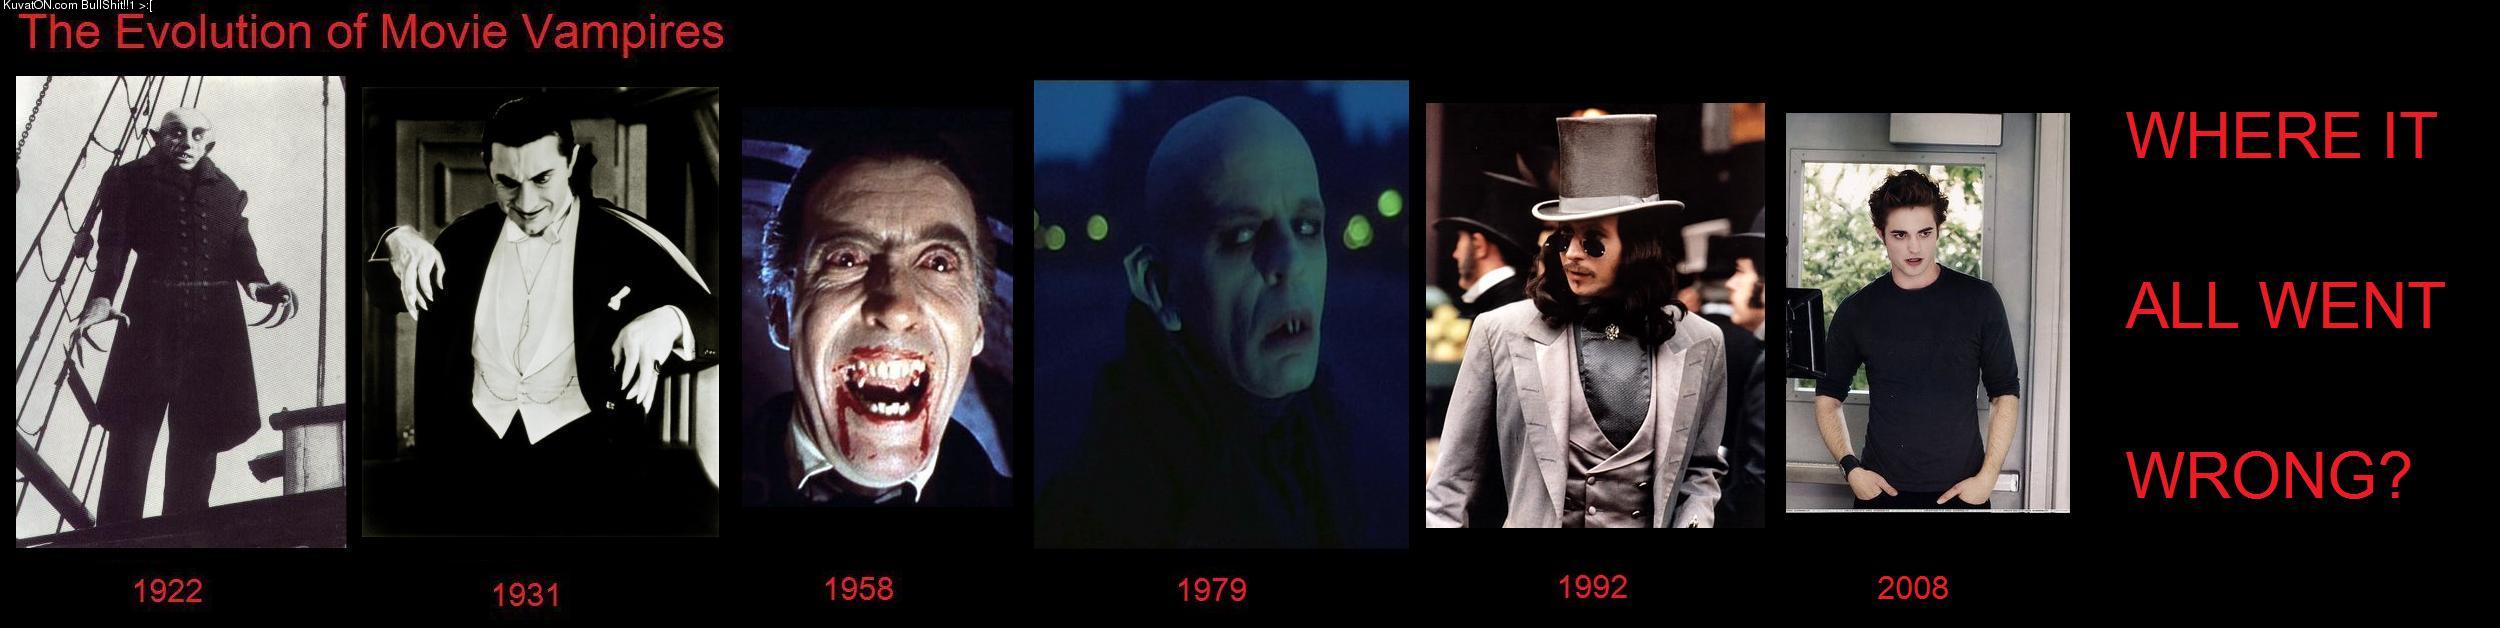 the_evolution_of_movie_vampires.jpg